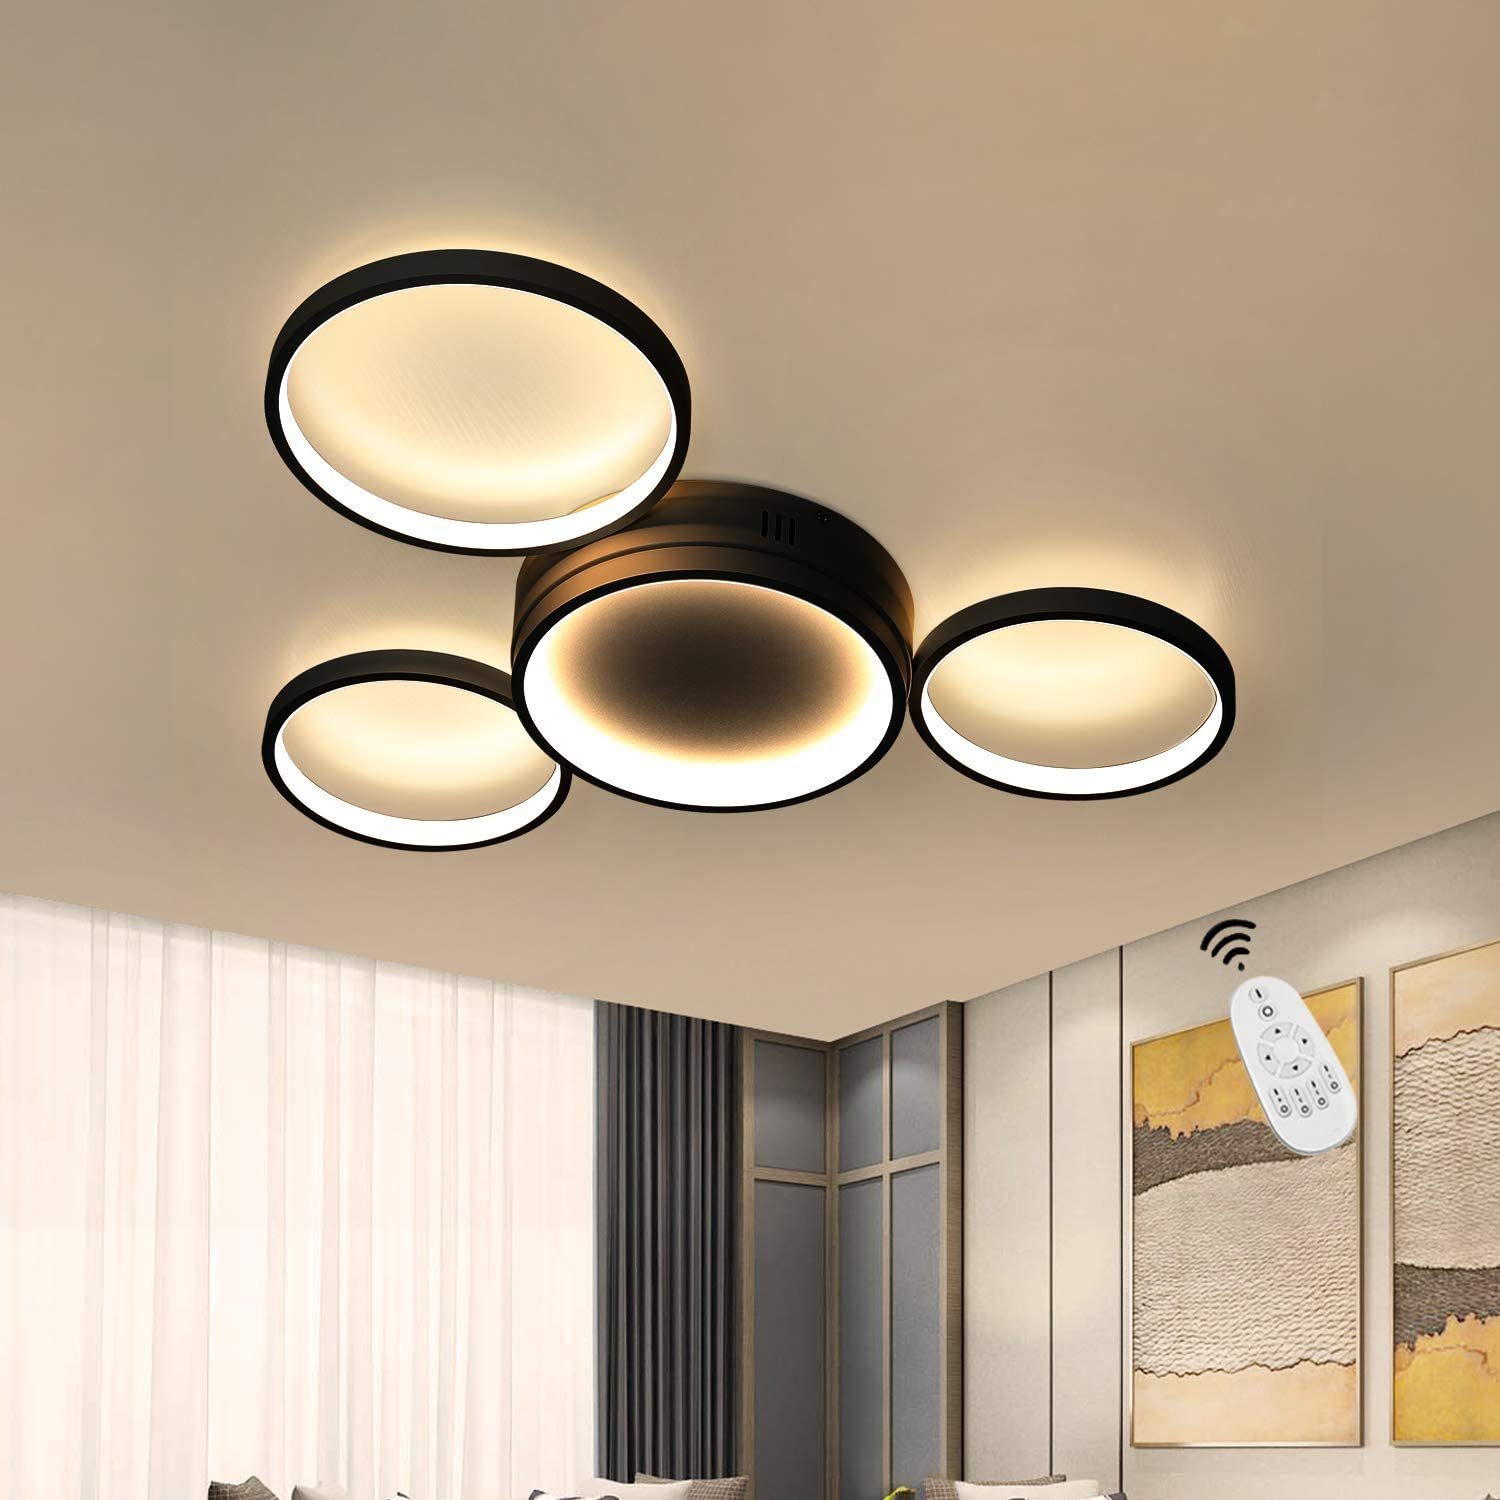 verstellbare LED Decken Leuchte Design Flur Ess Wohn Schlaf Raum Lampen dimmbar 